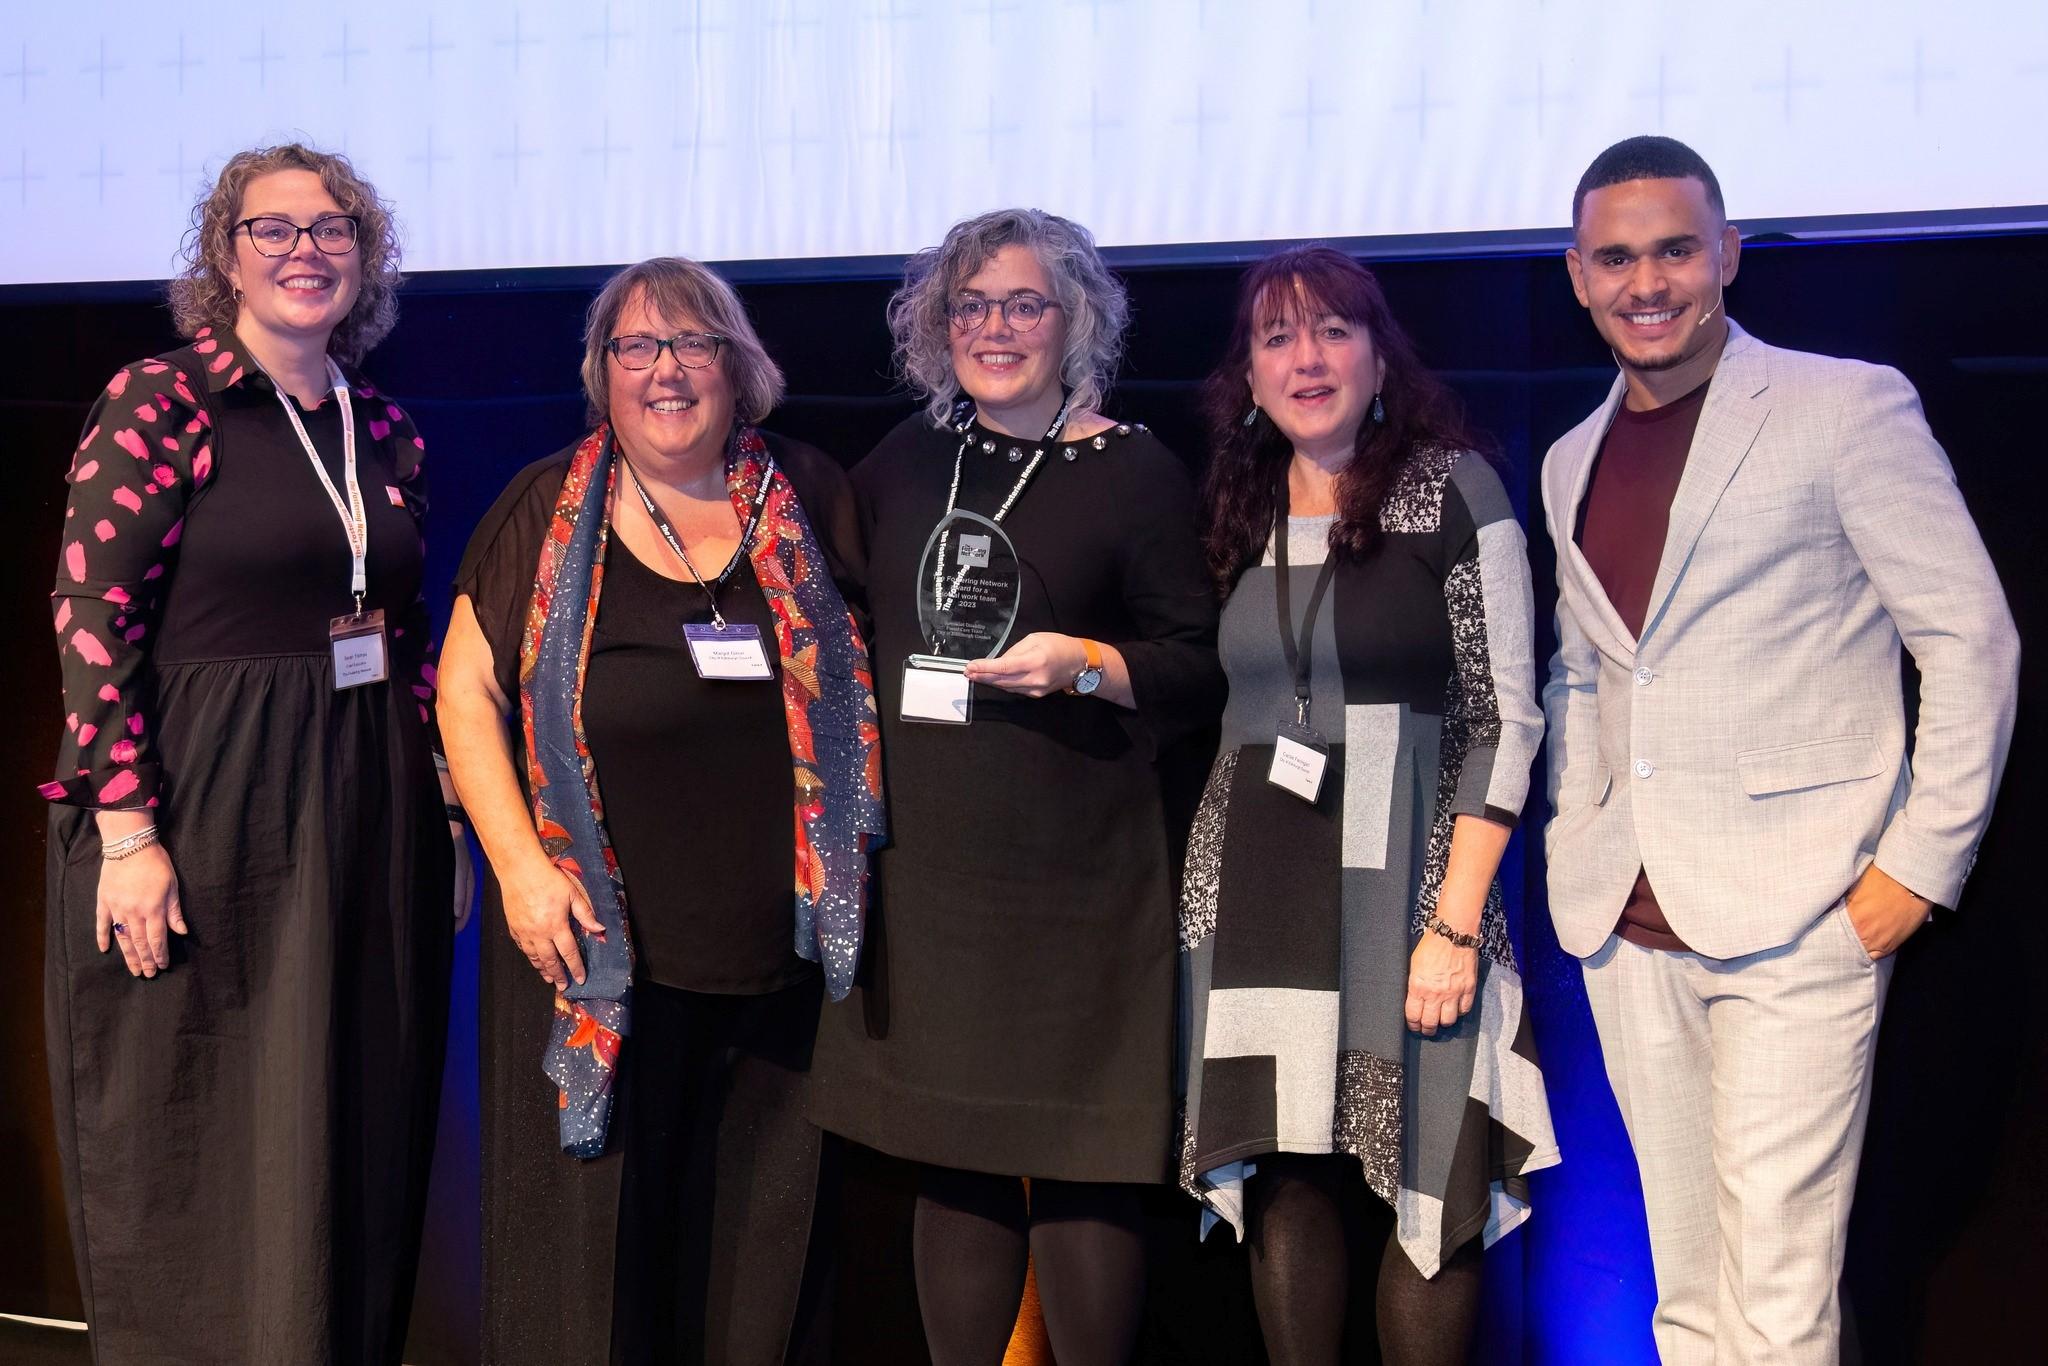 Fostering Network Award for Edinburgh Council